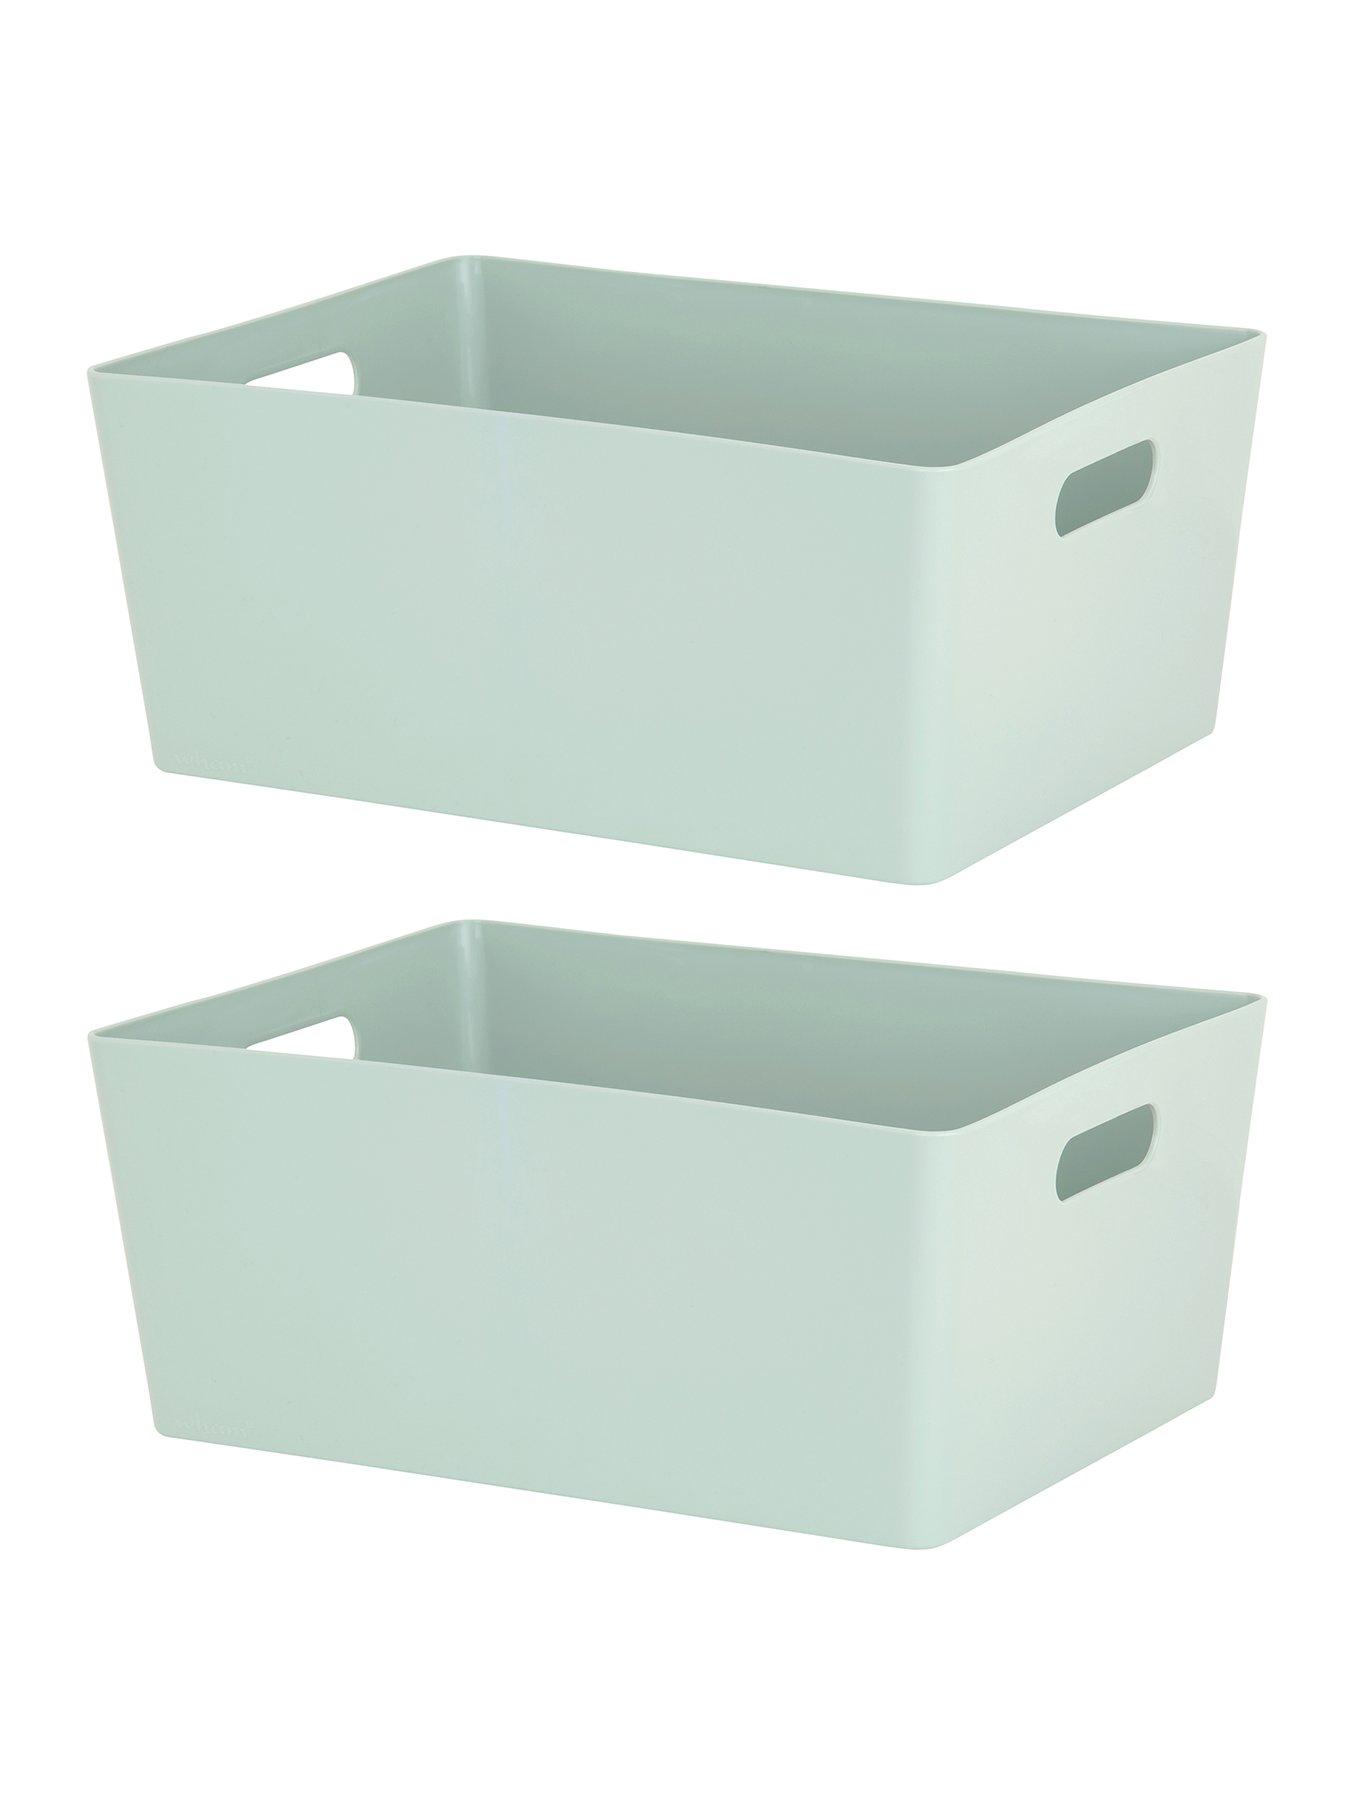 Details about   Wham Studio Plastic Storage Basket Home Kitchen Office Organiser Storage Boxes 